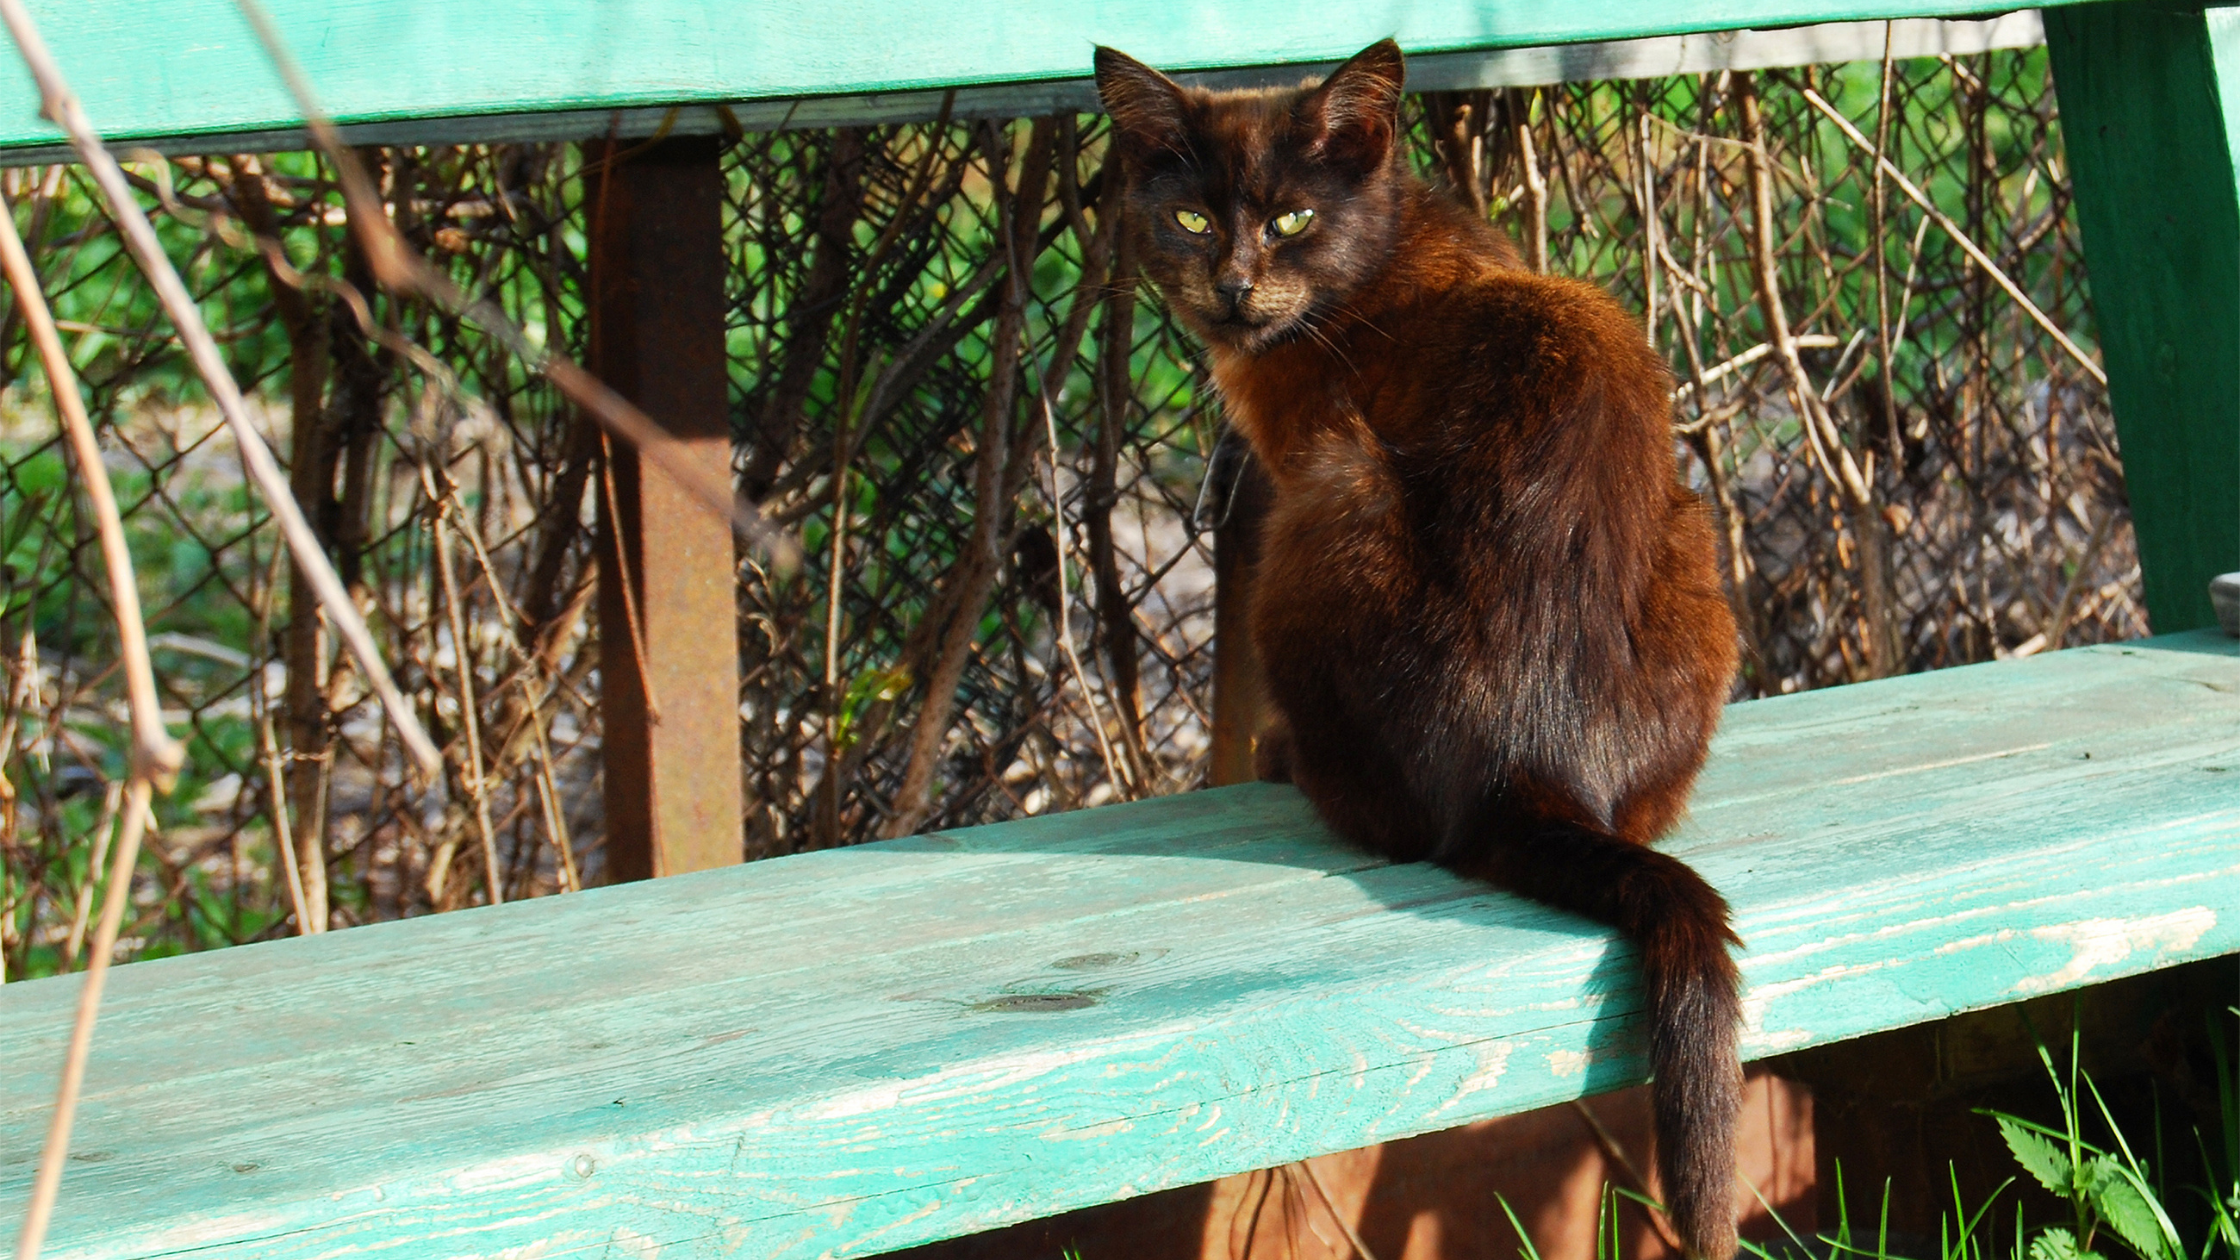 a chocolate colored cat